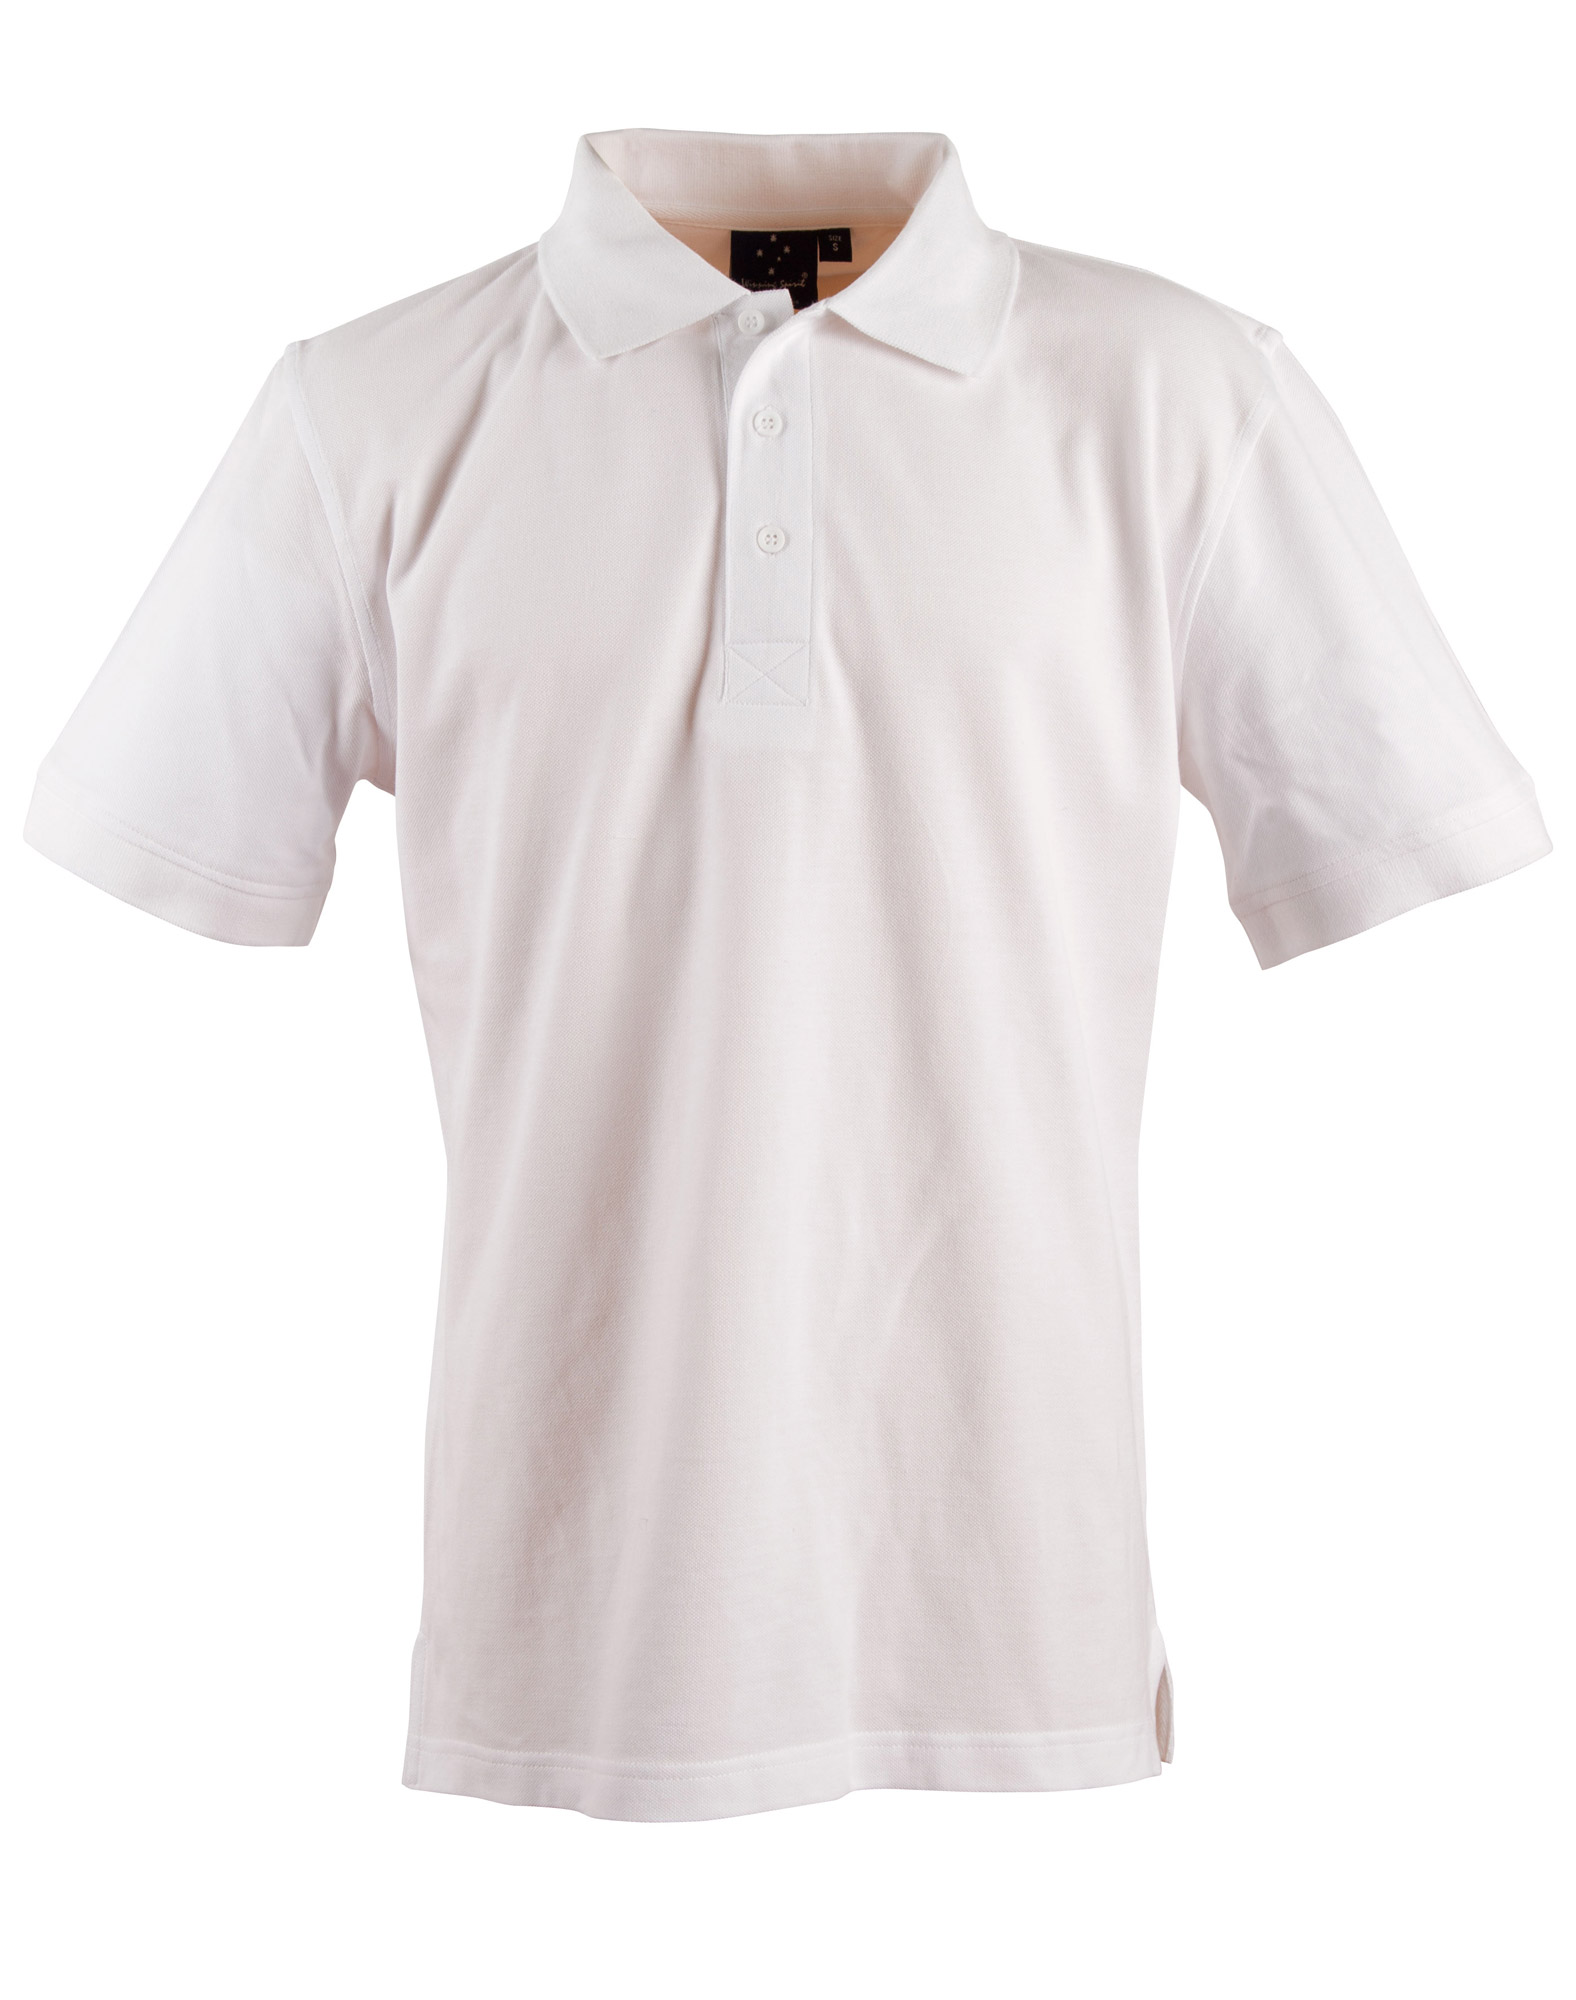 Men's T Shirts Australia | Men’s Longbeach Cotton Short Sleeve Polo ...